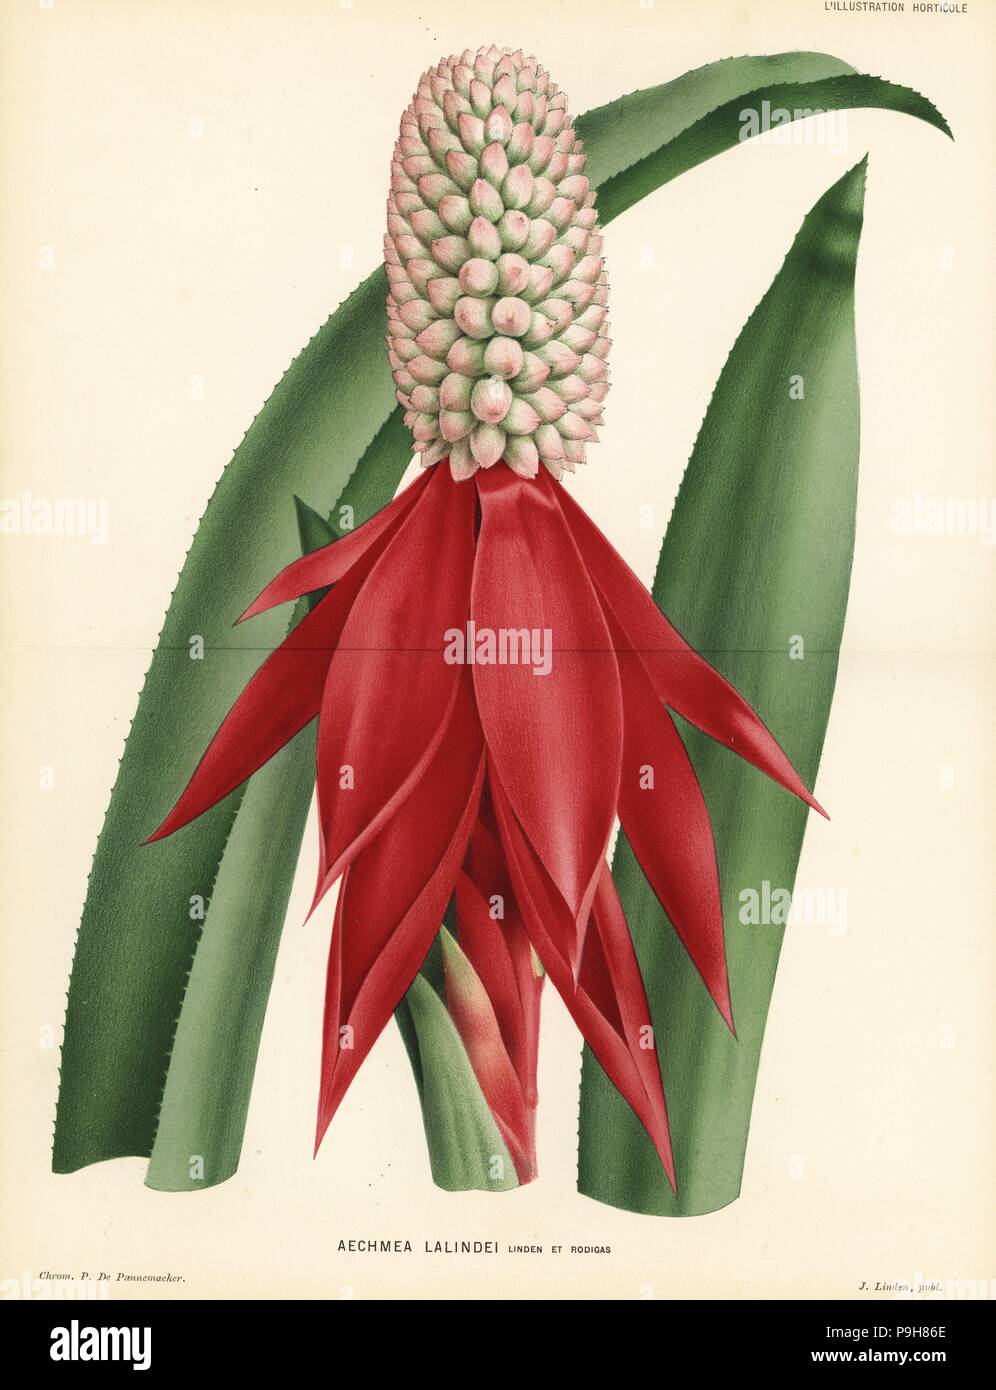 Aechmea mariae-reginae (Aechmea lalindei). Chromolithograph by Pieter de Pannemaeker from Jean Linden's l'Illustration Horticole, Brussels, 1883. Stock Photo